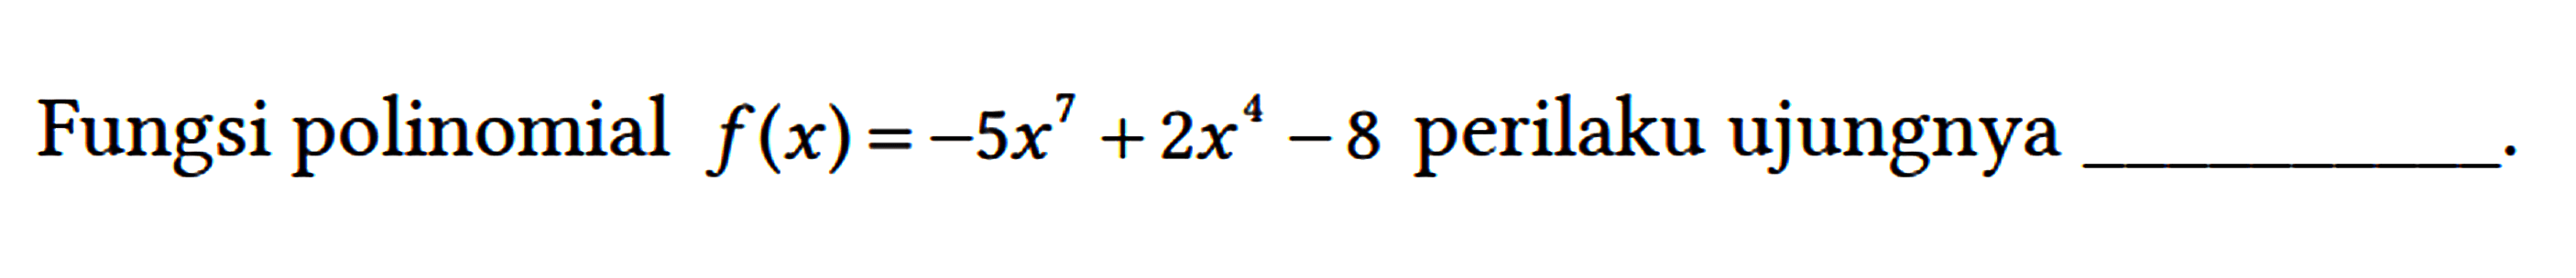 Fungsi polinomial f(x)=-5 x^(7)+2 x^(4)-8 perilaku ujungnya